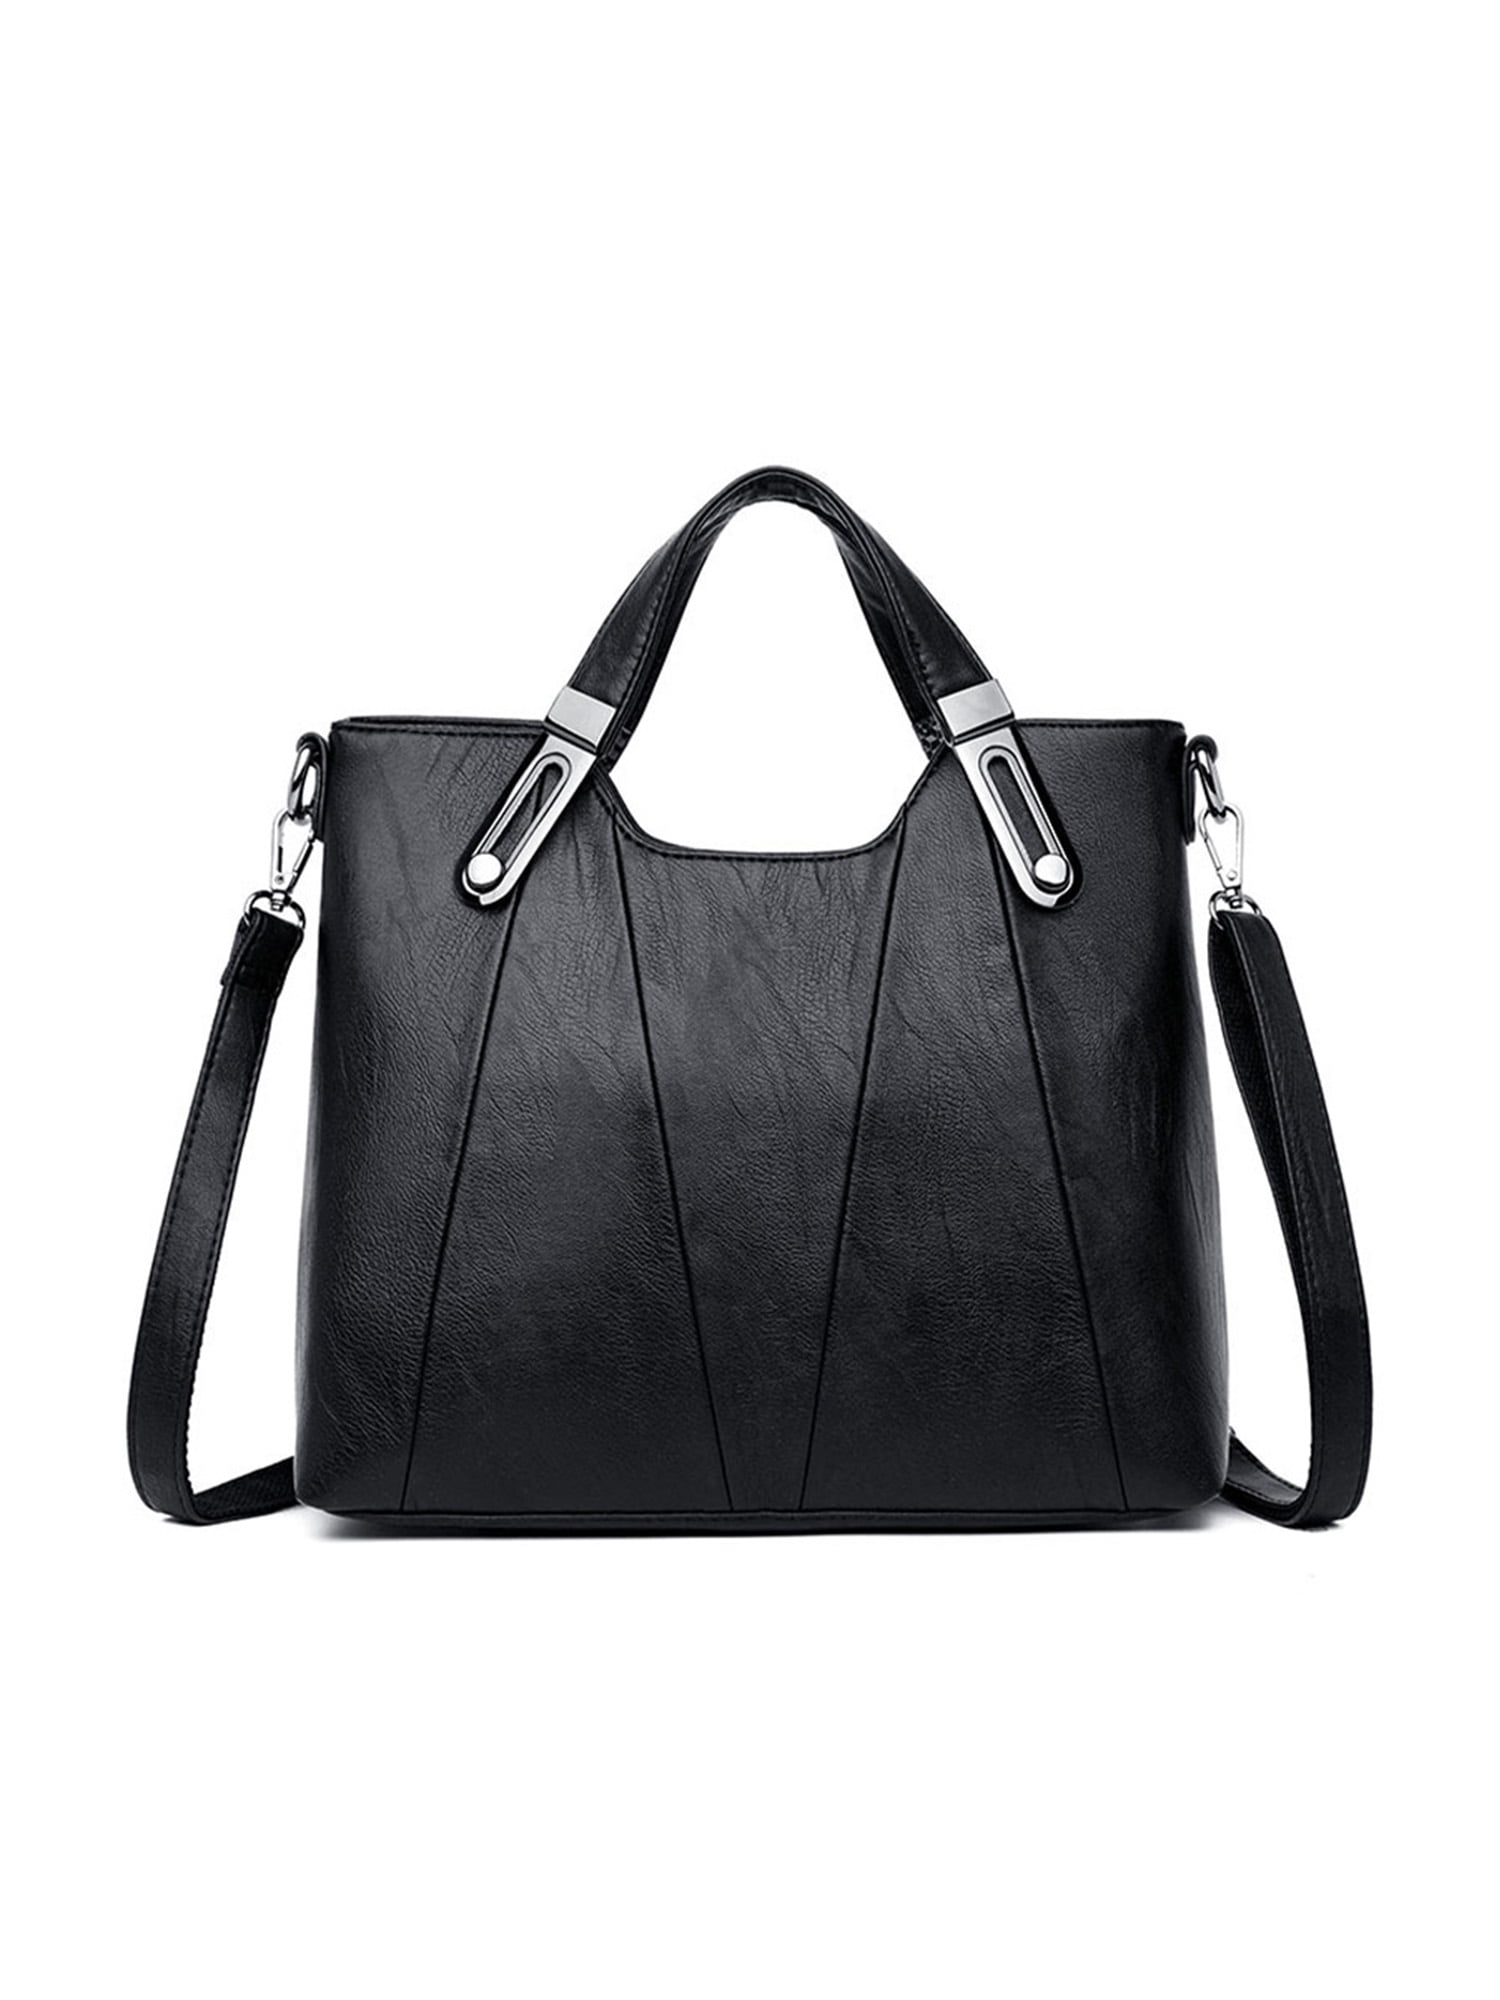 Capreze Ladies Handbag Top Handle Tote Bag Multi Pockets Genuine ...